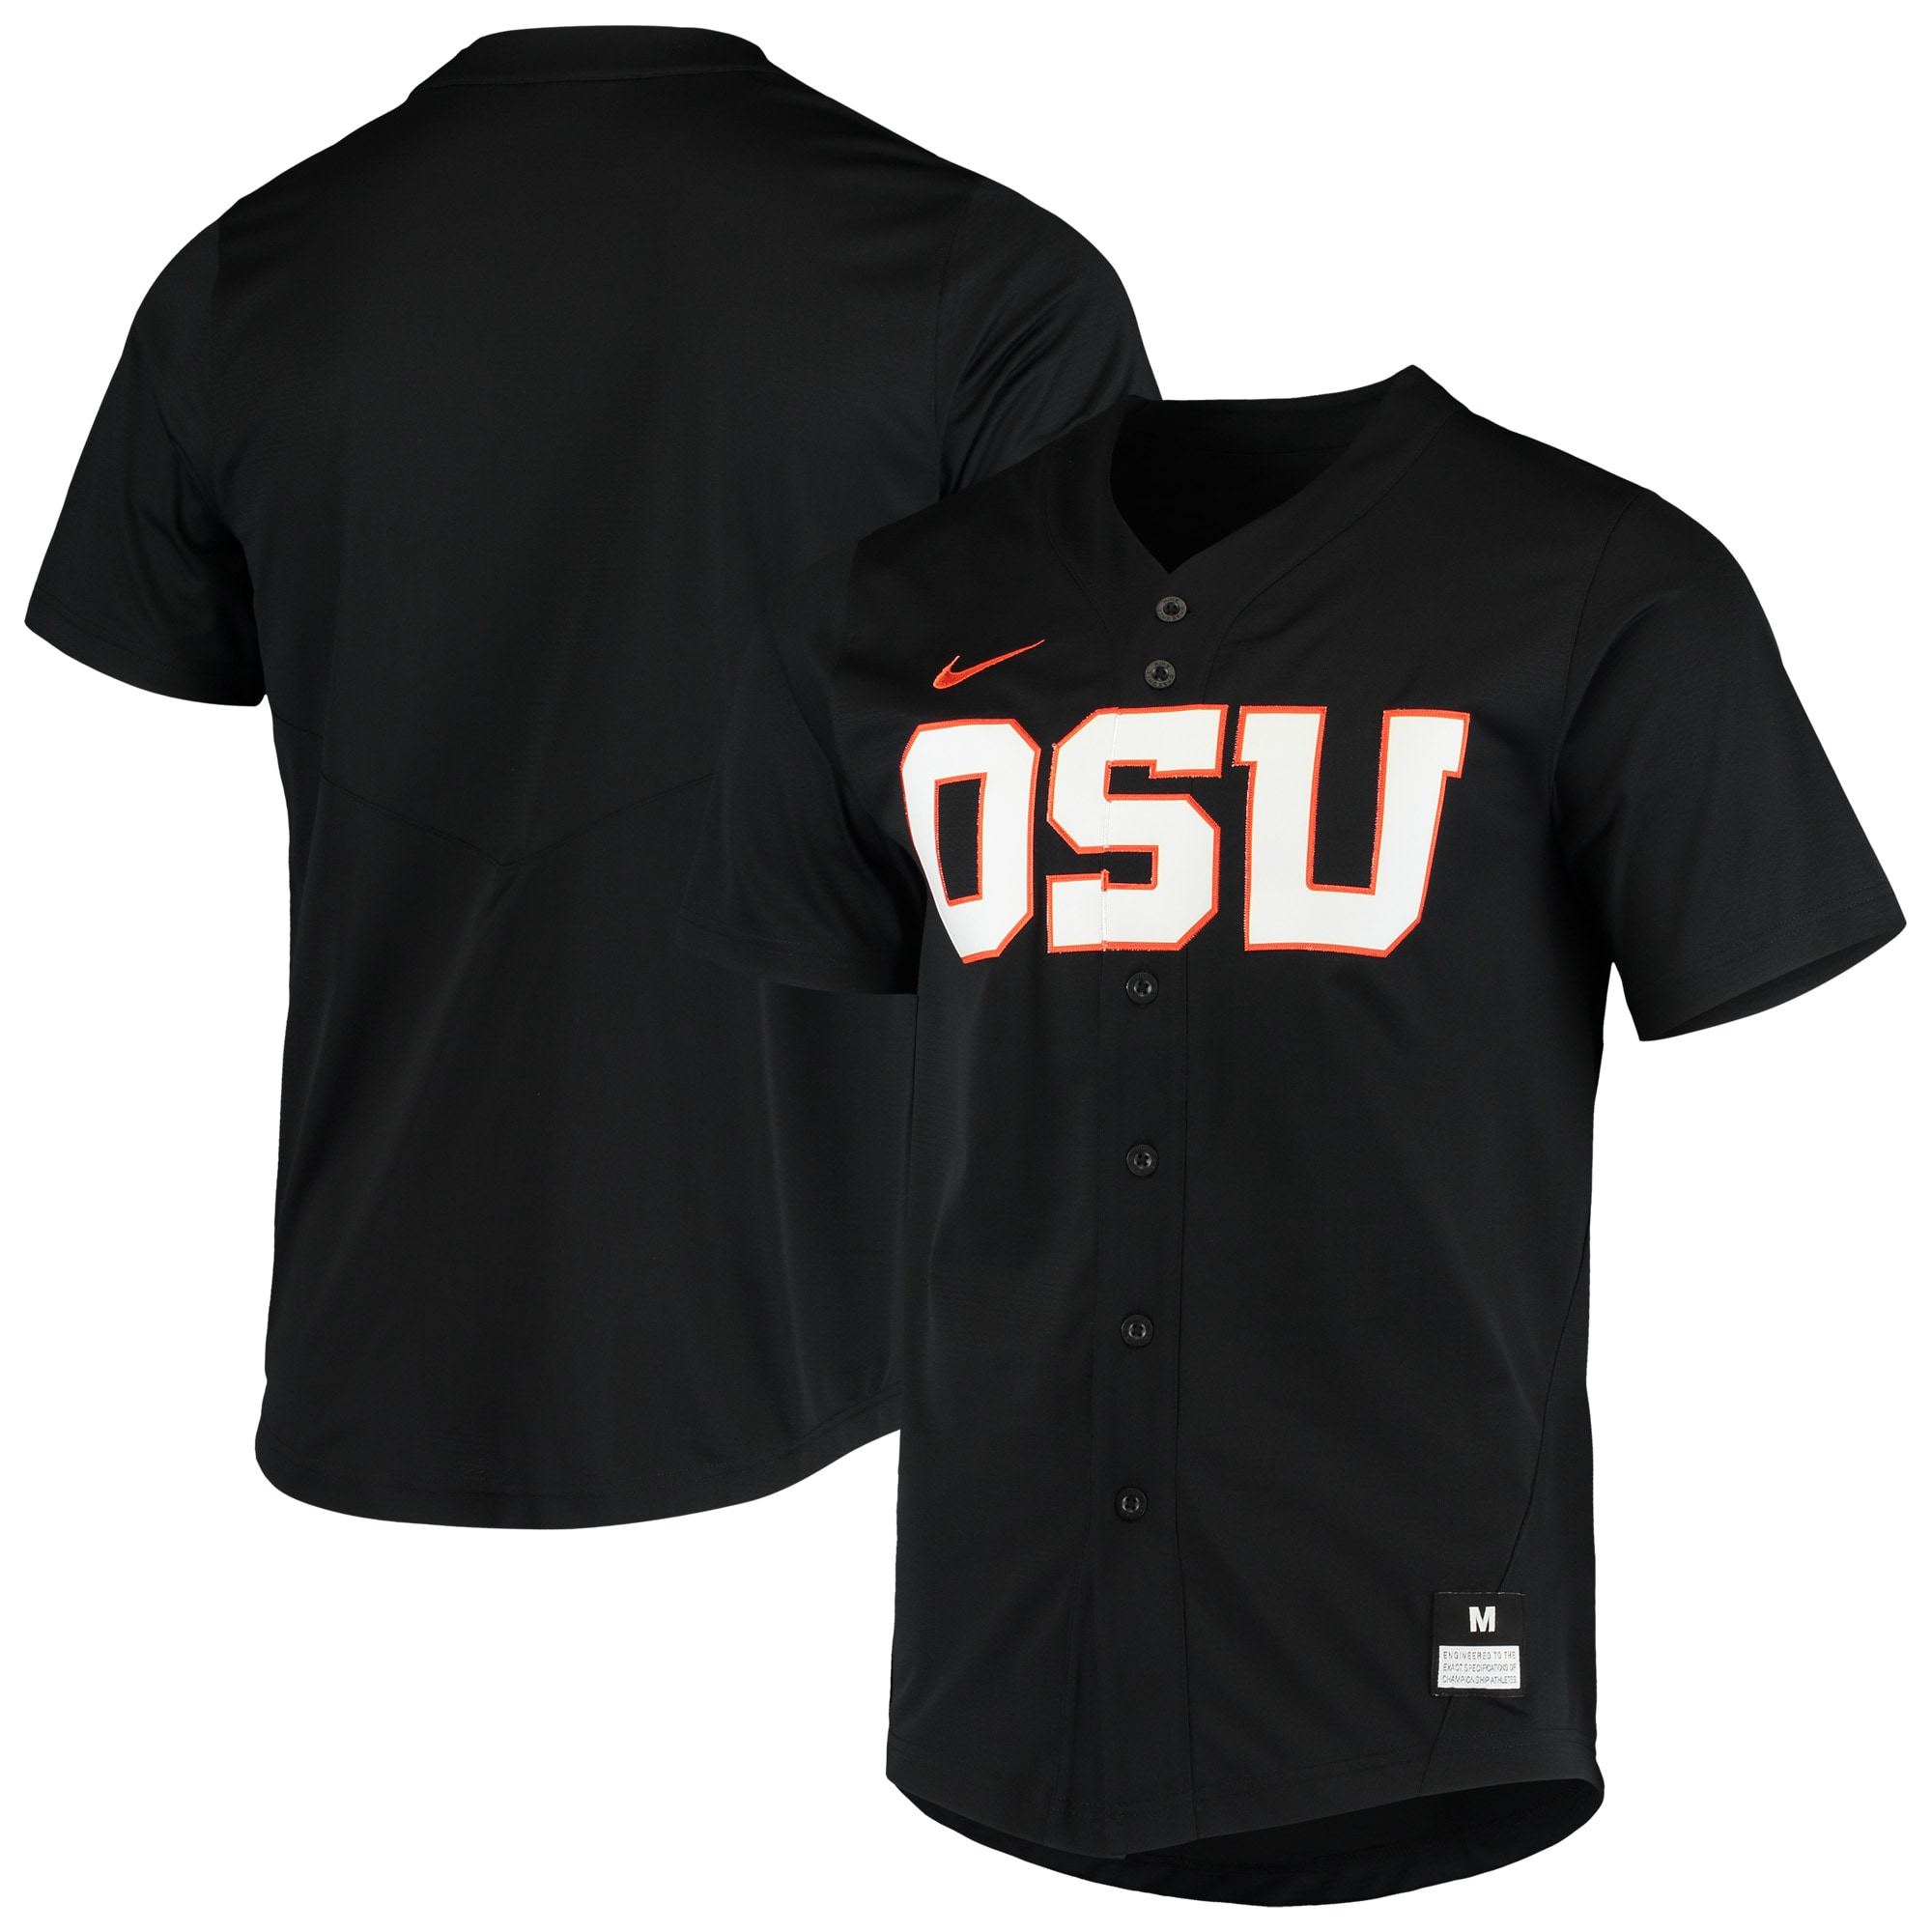 Oregon State Beavers Vapor Untouchable Elite Replica Full-Button Baseball Jersey - Black For Youth Women Men